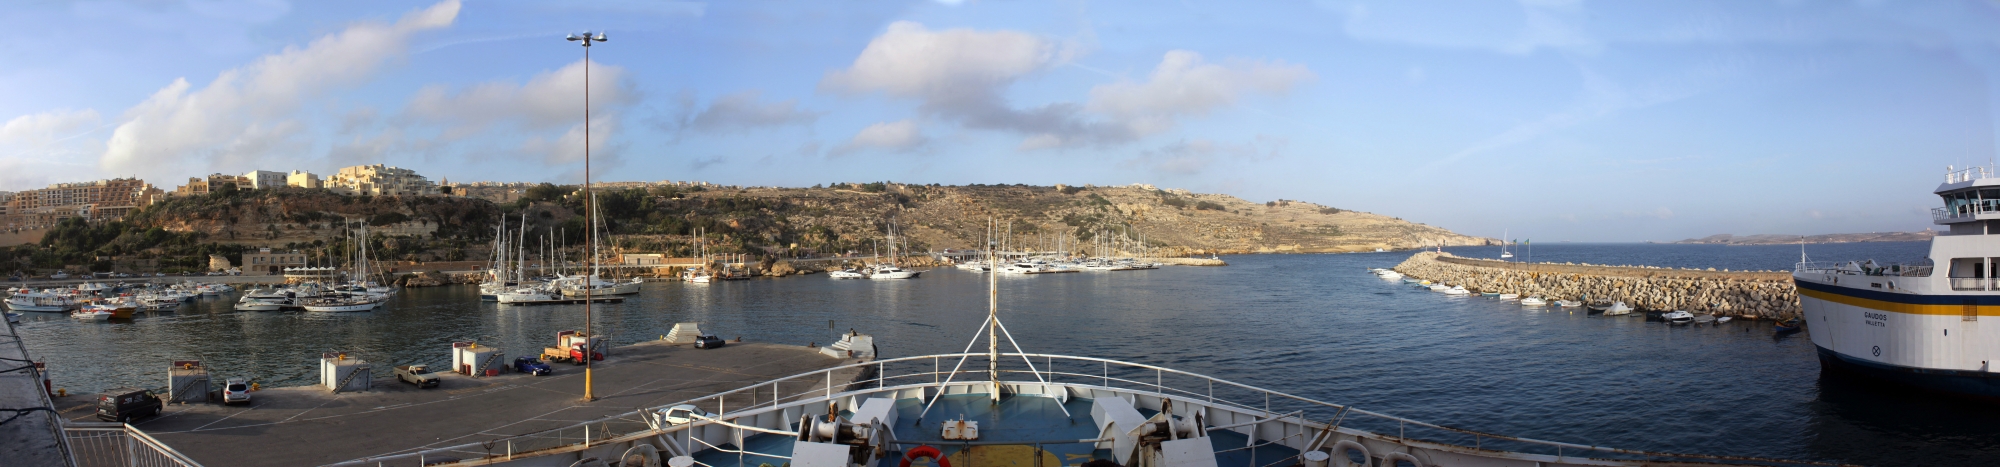 Port maritime de Gozo